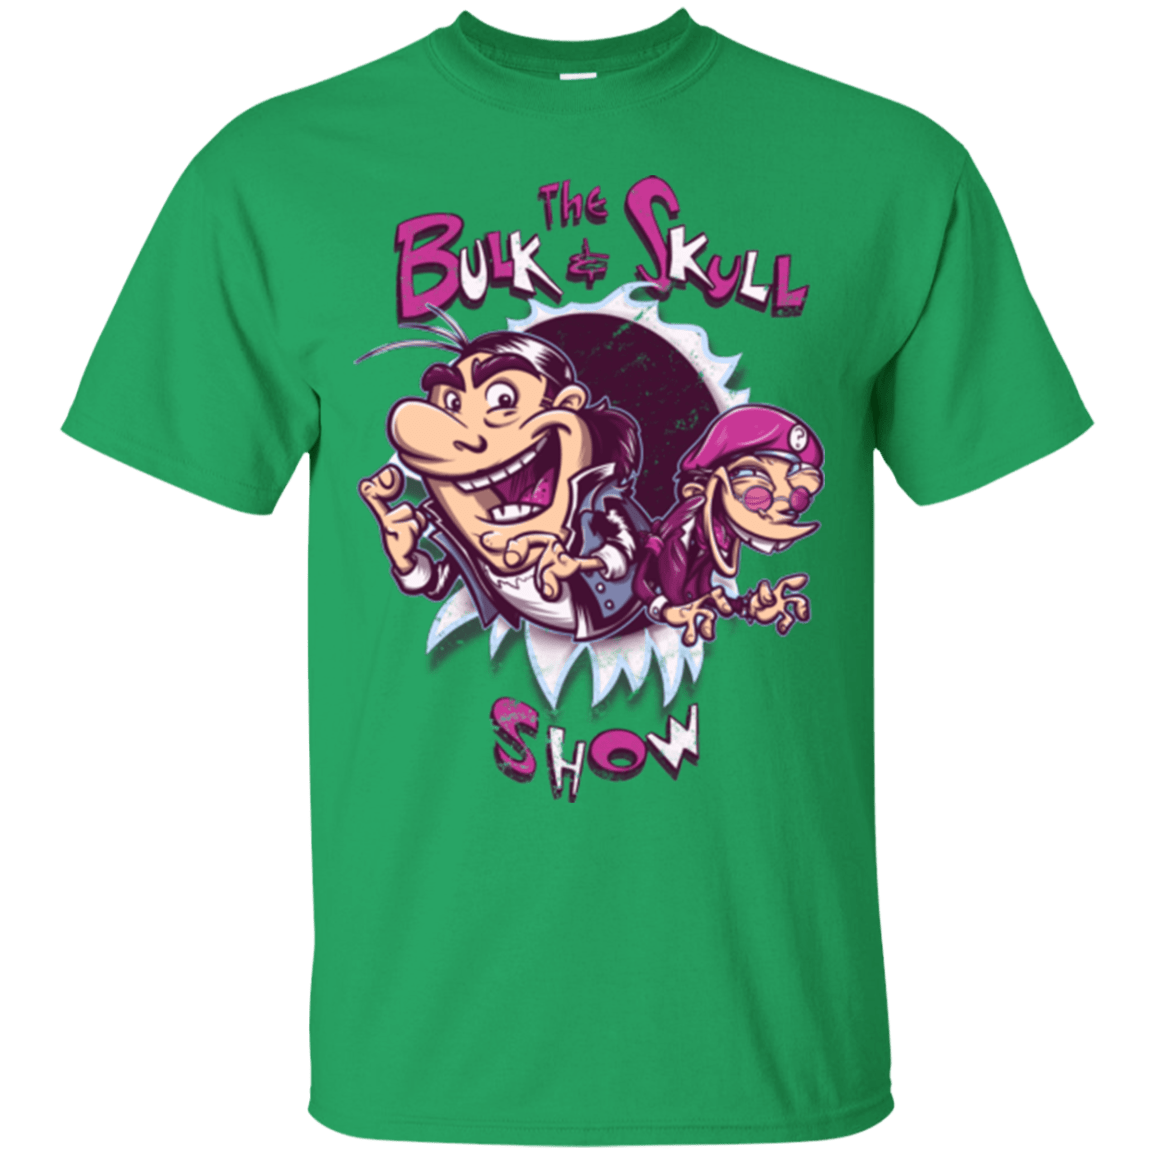 T-Shirts Irish Green / Small Bulk and Skull Show T-Shirt